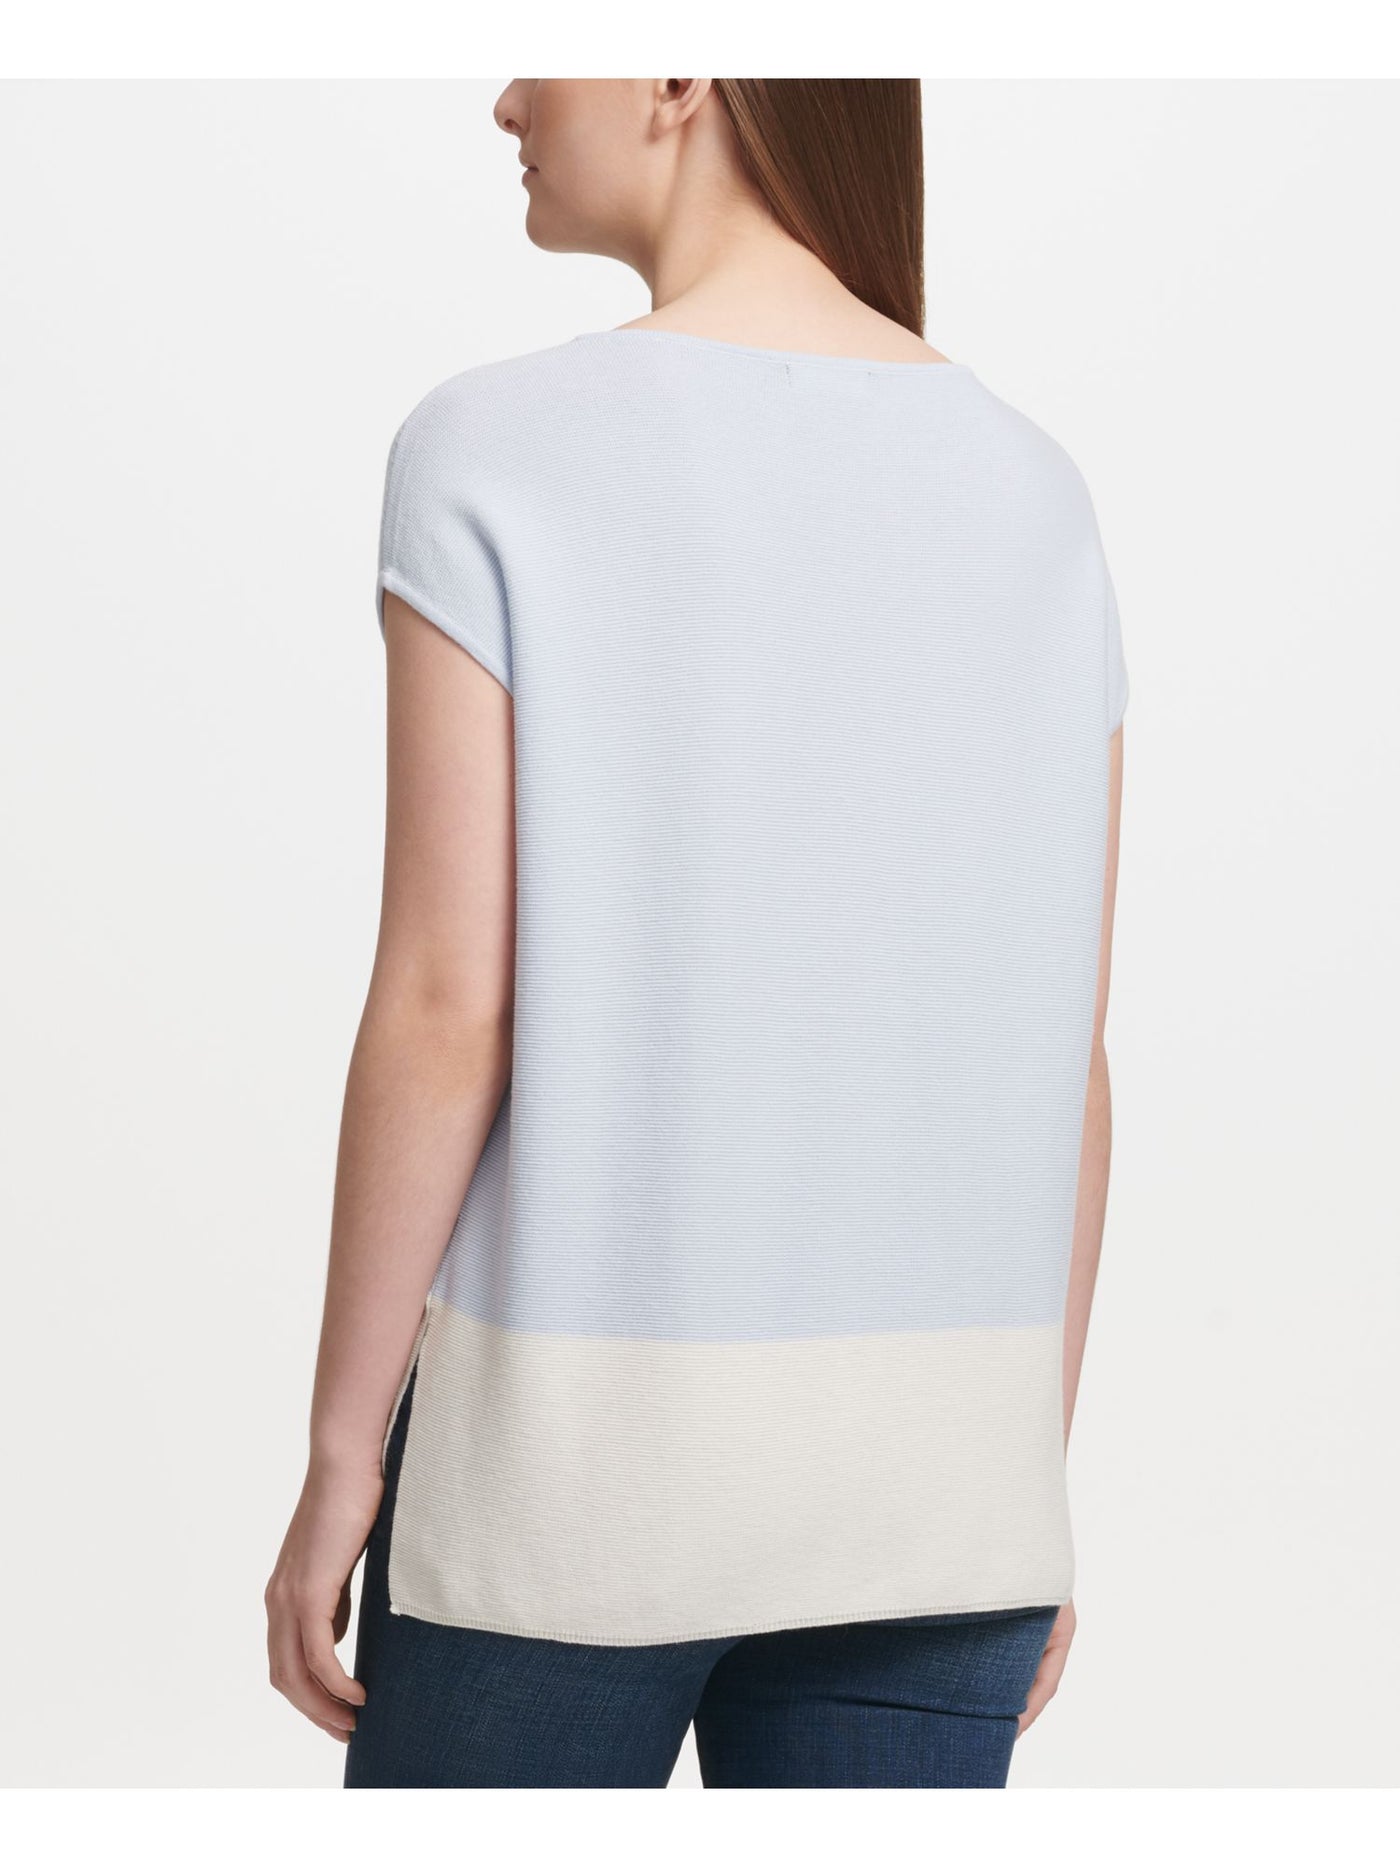 DKNY Womens Light Blue Color Block Cap Sleeve Jewel Neck T-Shirt M